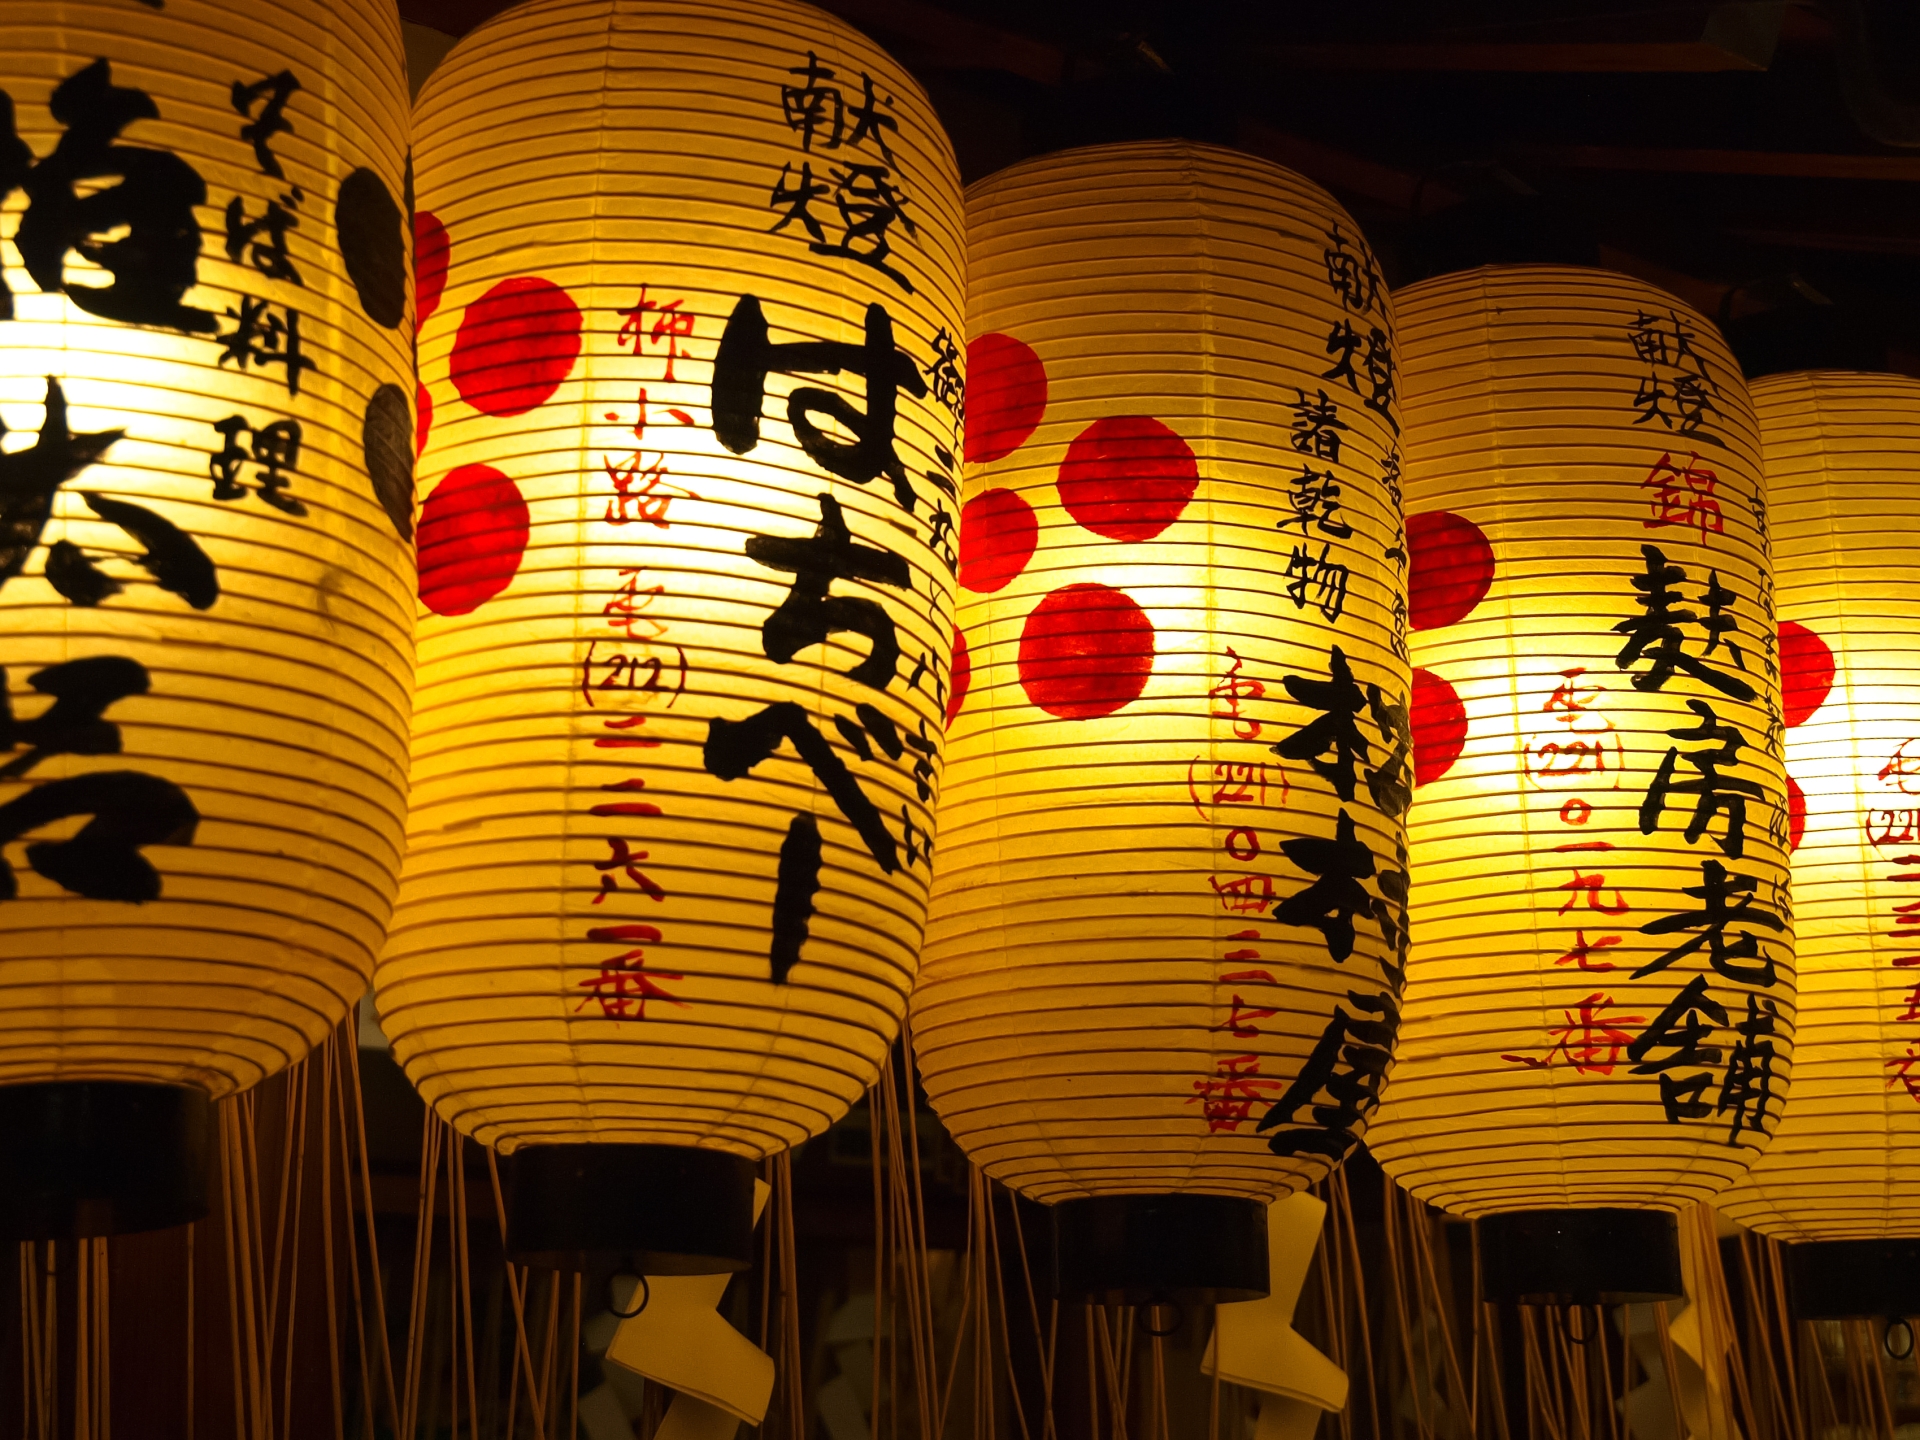 Japanese Lanterns outside of Temple